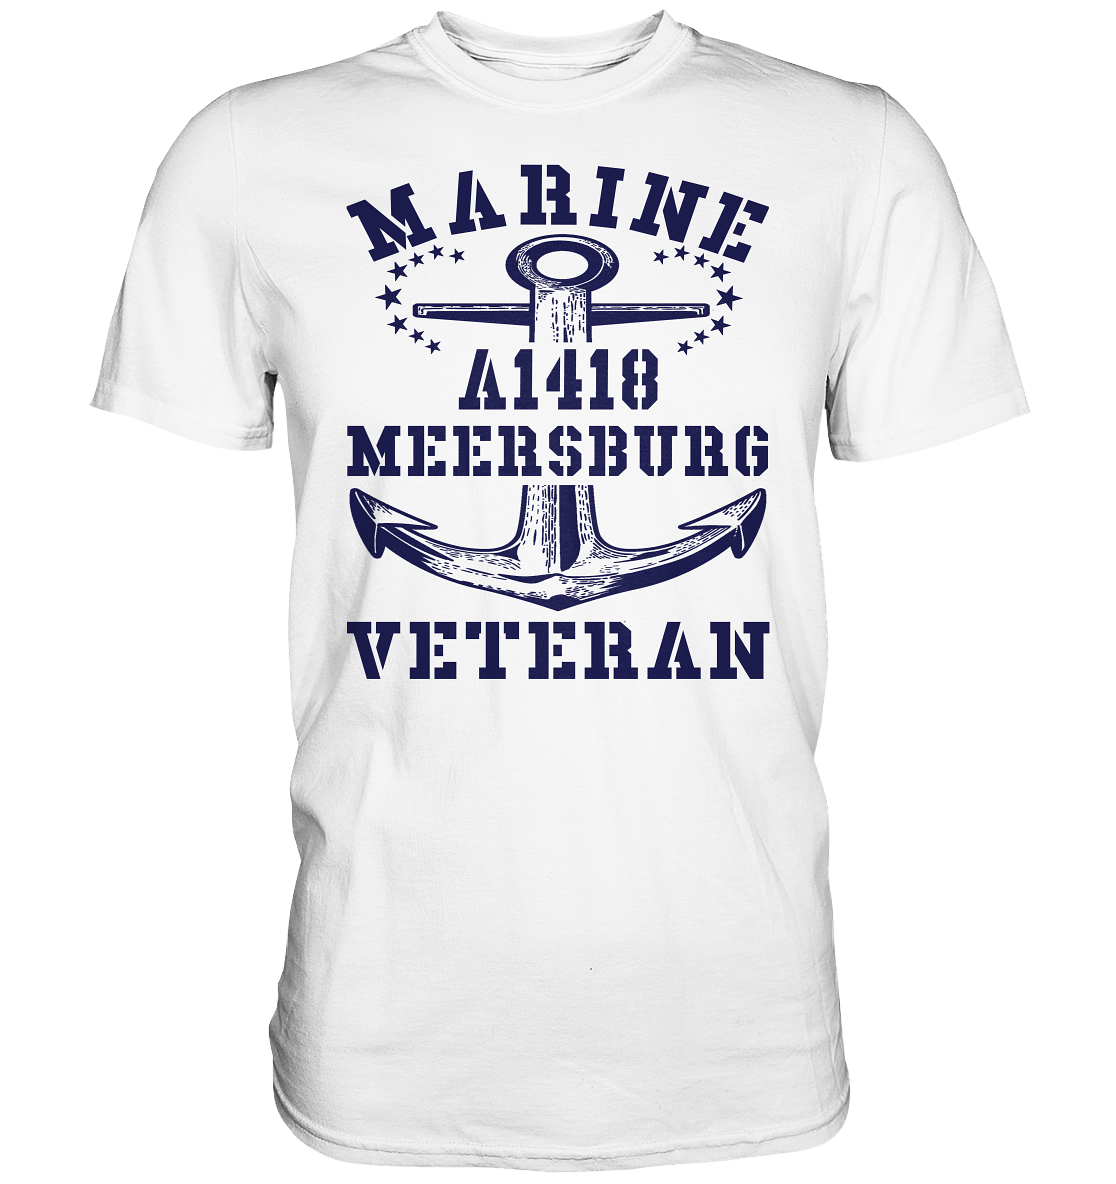 Troßschiff A1418 MEERSBURG Marine Veteran - Premium Shirt